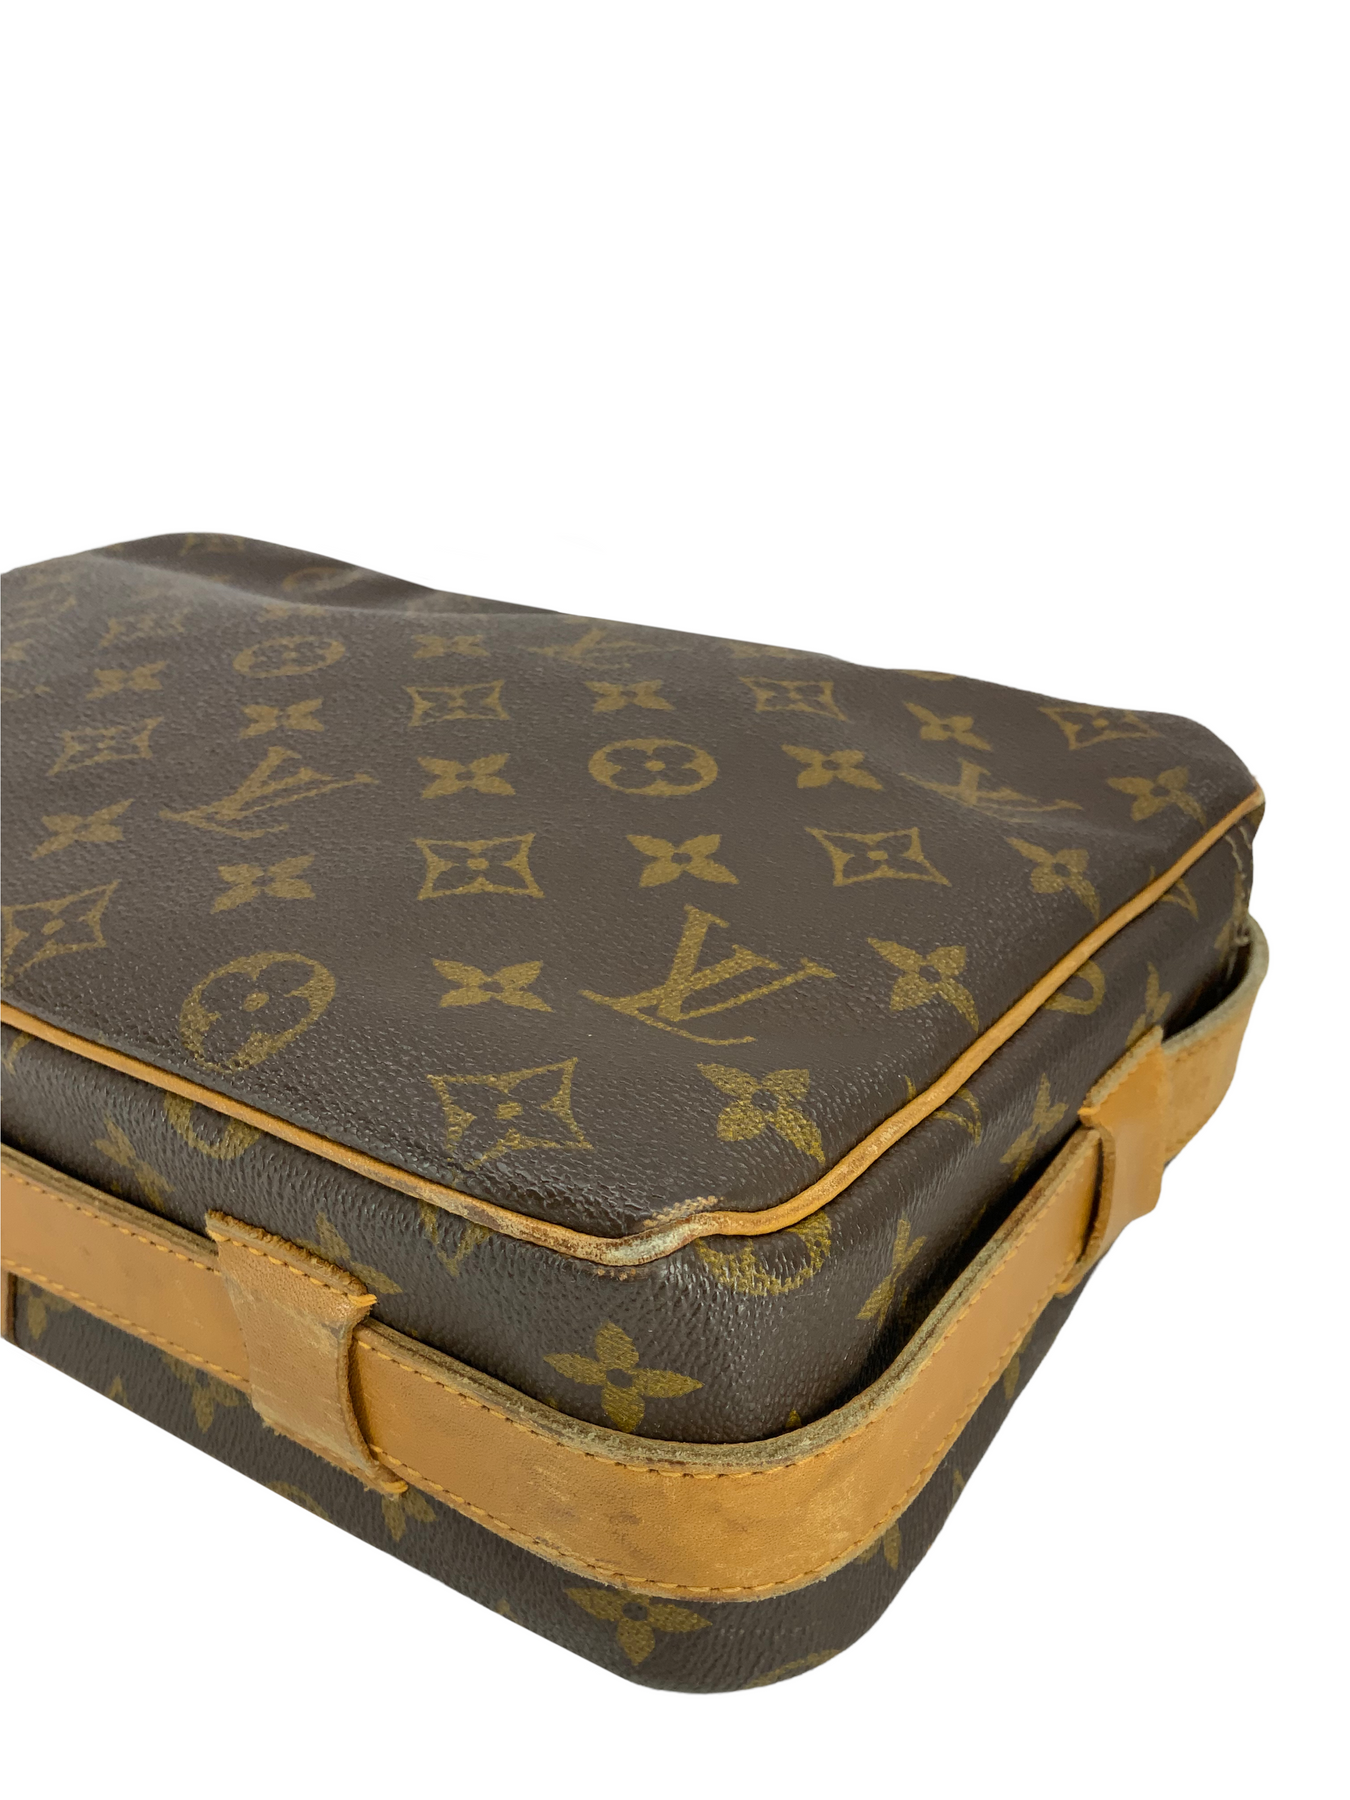 Vintage Louis Vuitton Sac Bandoliere Unsex Satchel/Crossbody Bag. Circa  1980 - pre date code. Heat stamped “Louis Vuitton Paris Made In…